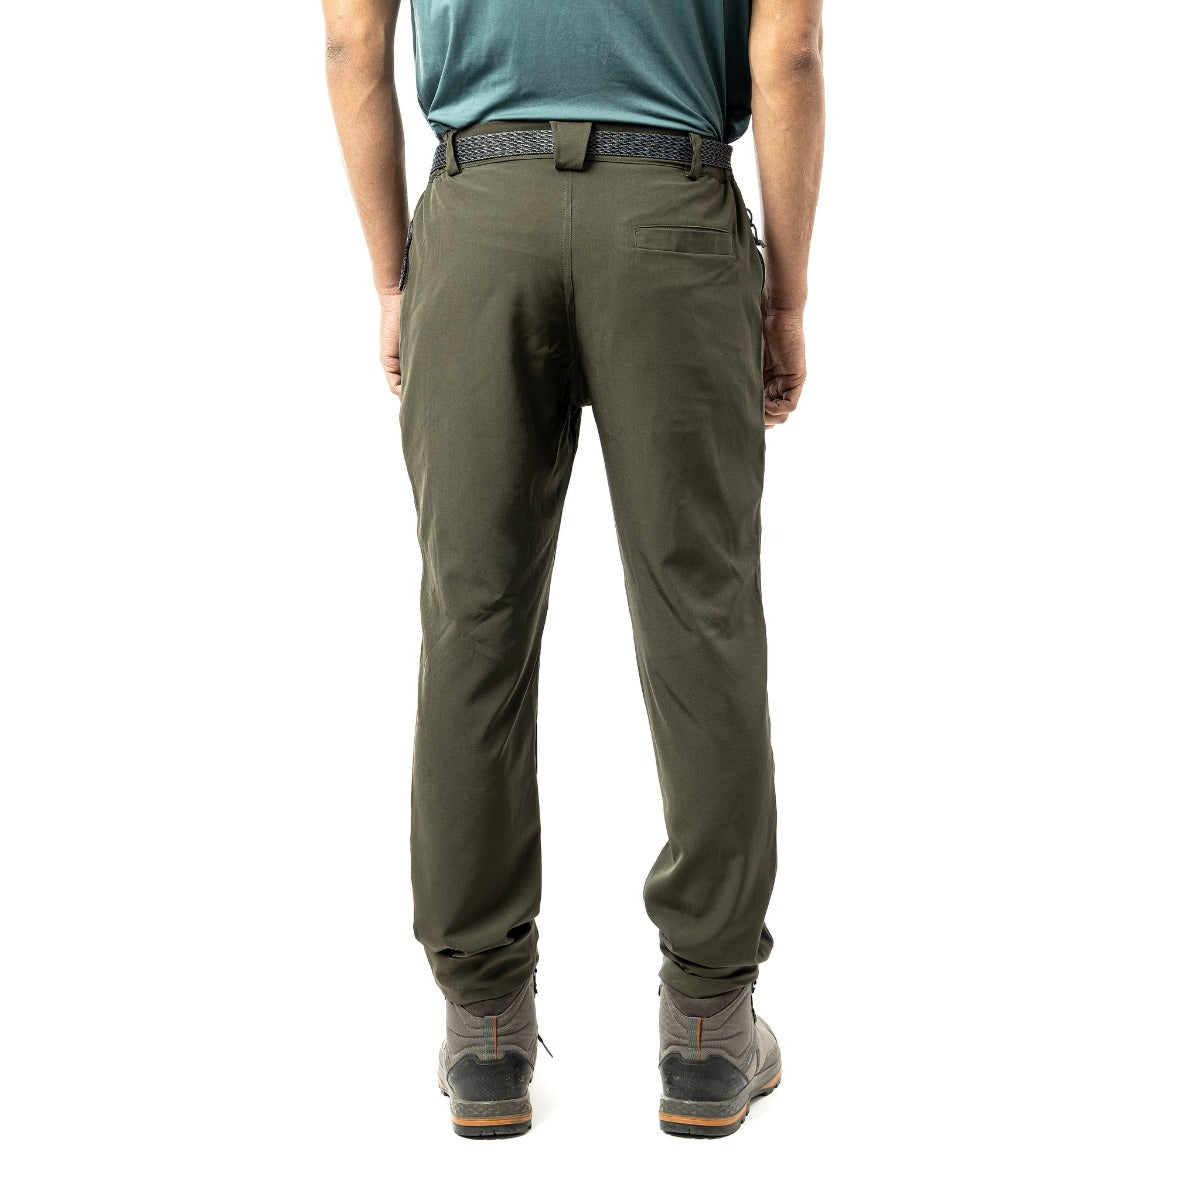 Men's Trekking and Hiking Pants - Green & Grey 3